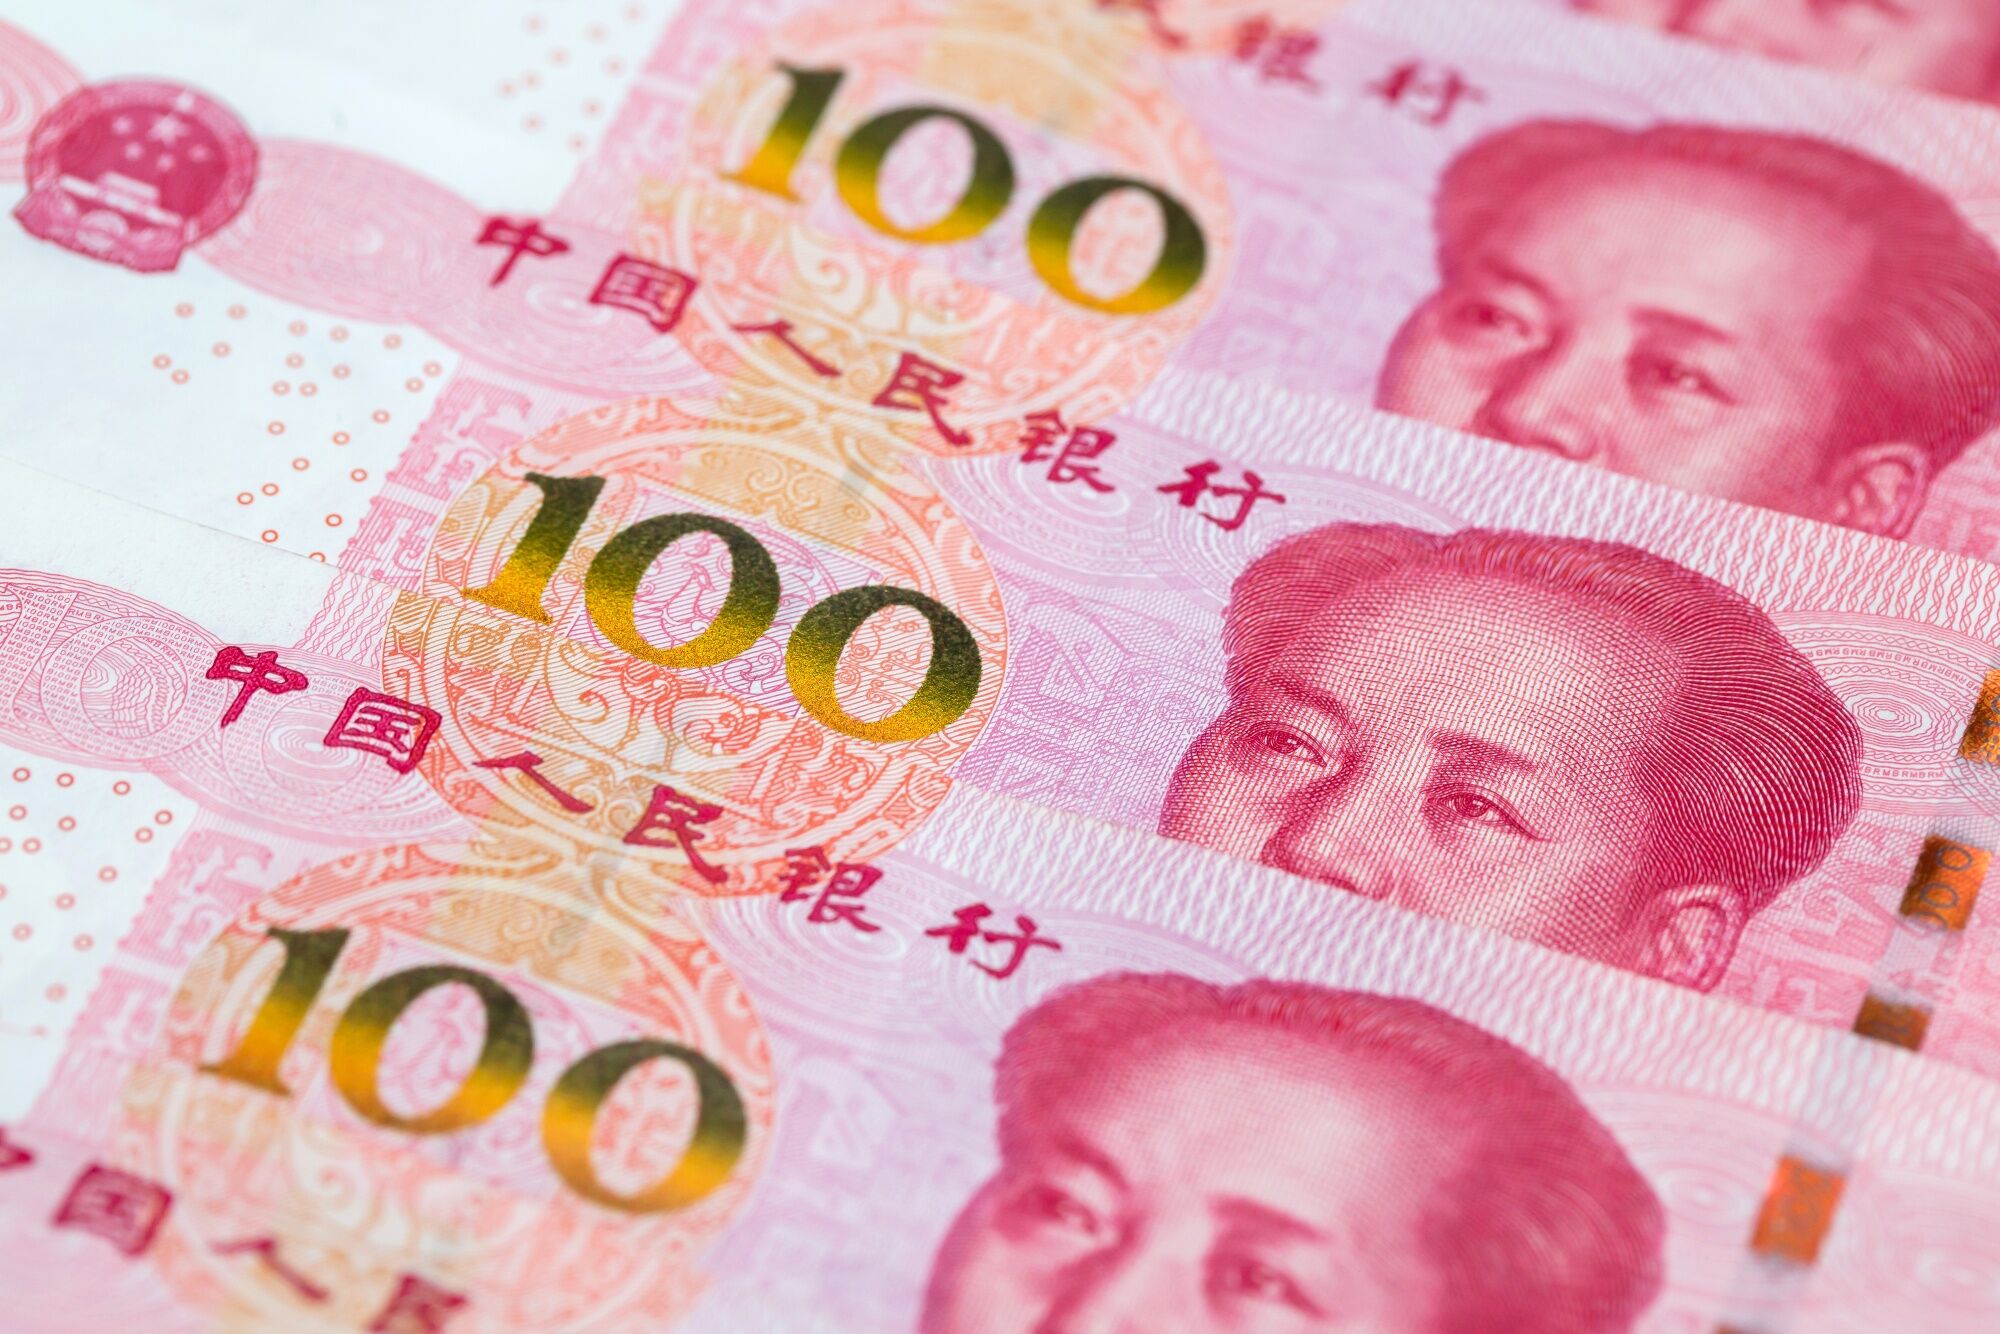 Rmb to rub. 100 Юаней. Китайский юань. Китайская валюта. Валюта Китая.